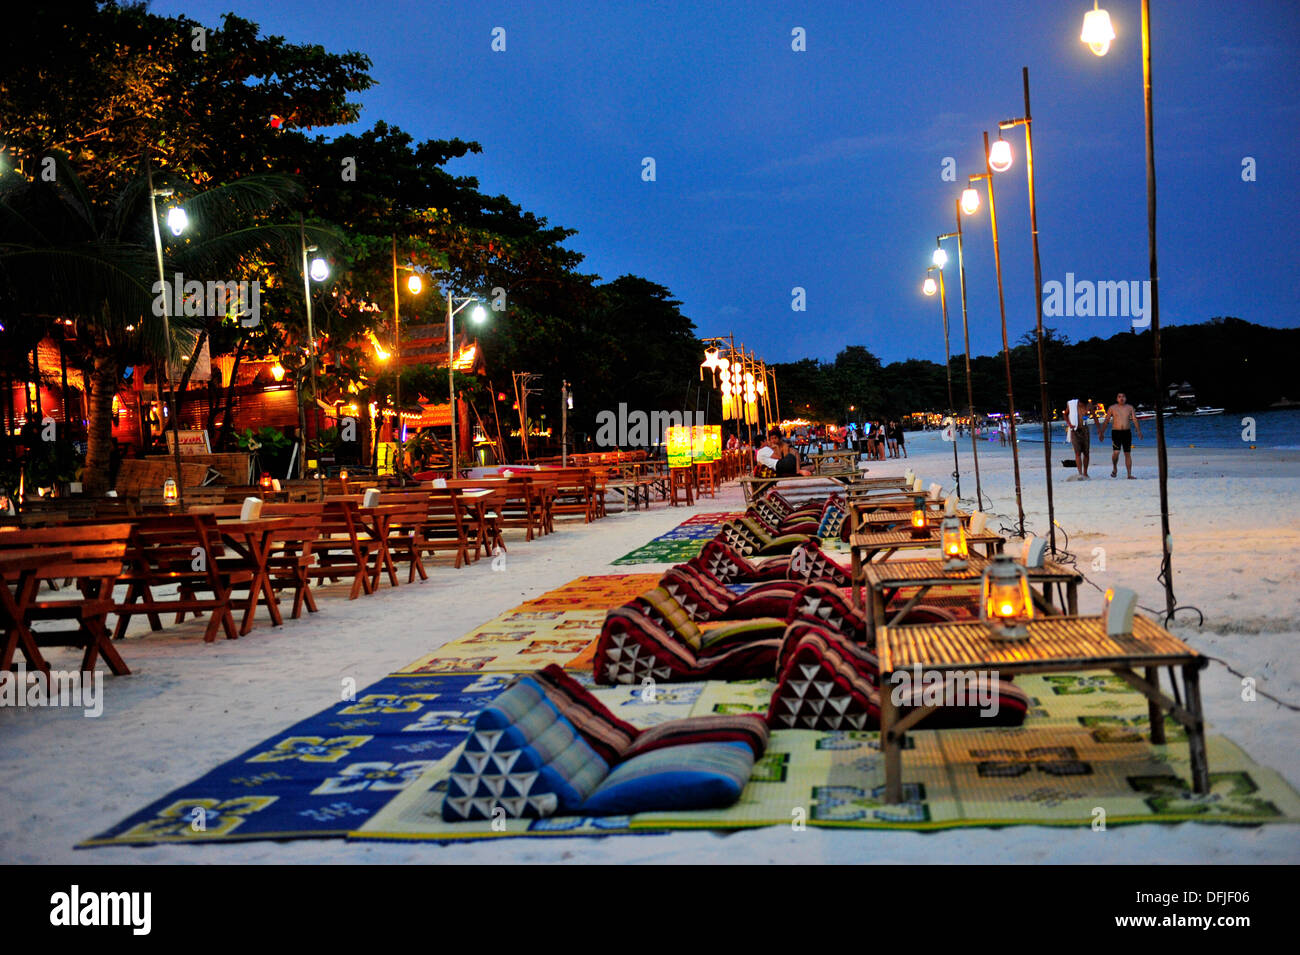 Thailand's islands & beaches - Dining on Thai triangle cushions in the sand at Sai Kaew Beach, Koh Samet island, Thailand Stock Photo